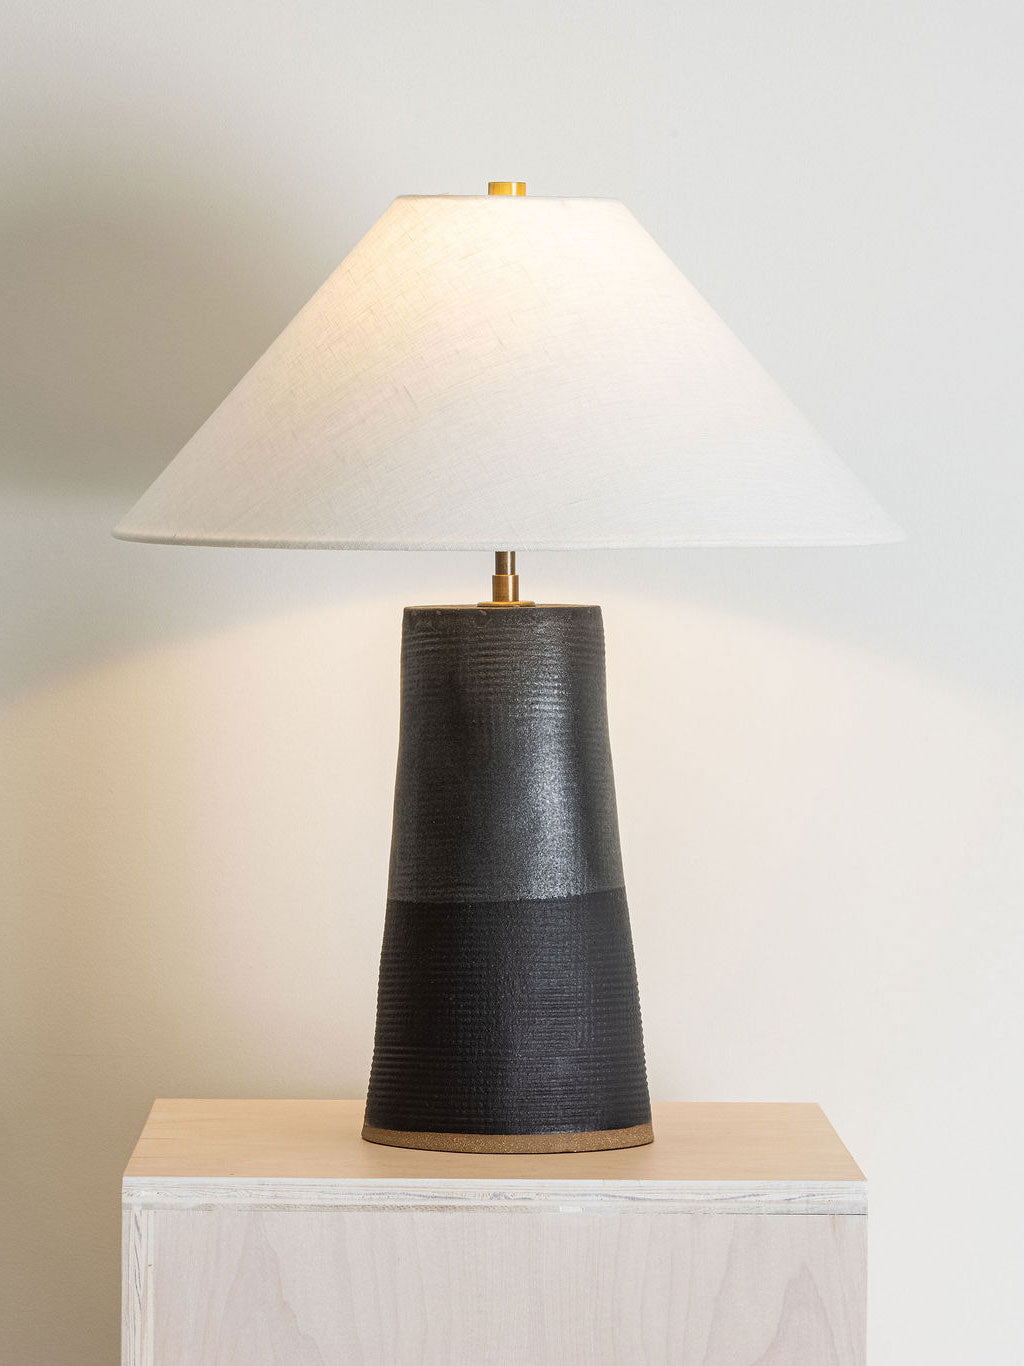 Hanover Lamp, Two Glazes